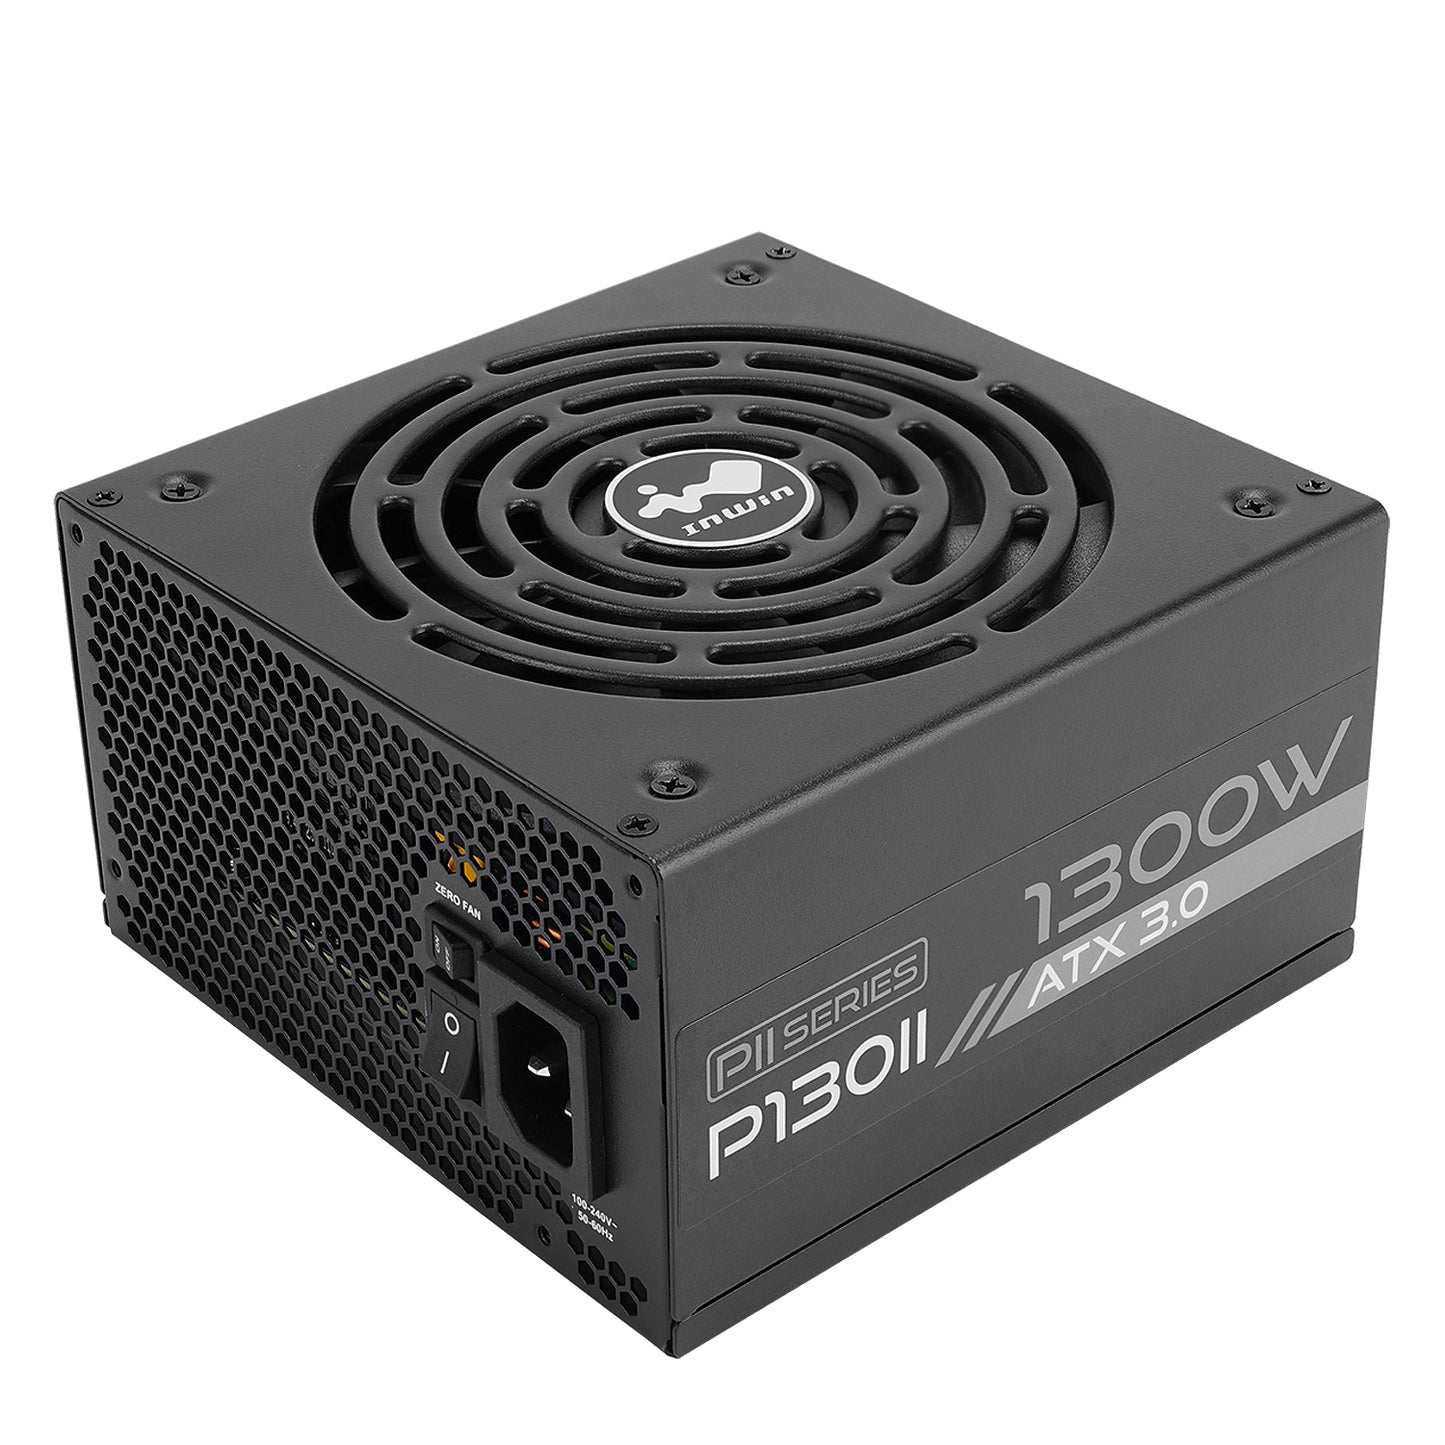 P130II (1300 Watts 80+ Platinum ATX 3.0 Fully Modular PSU)